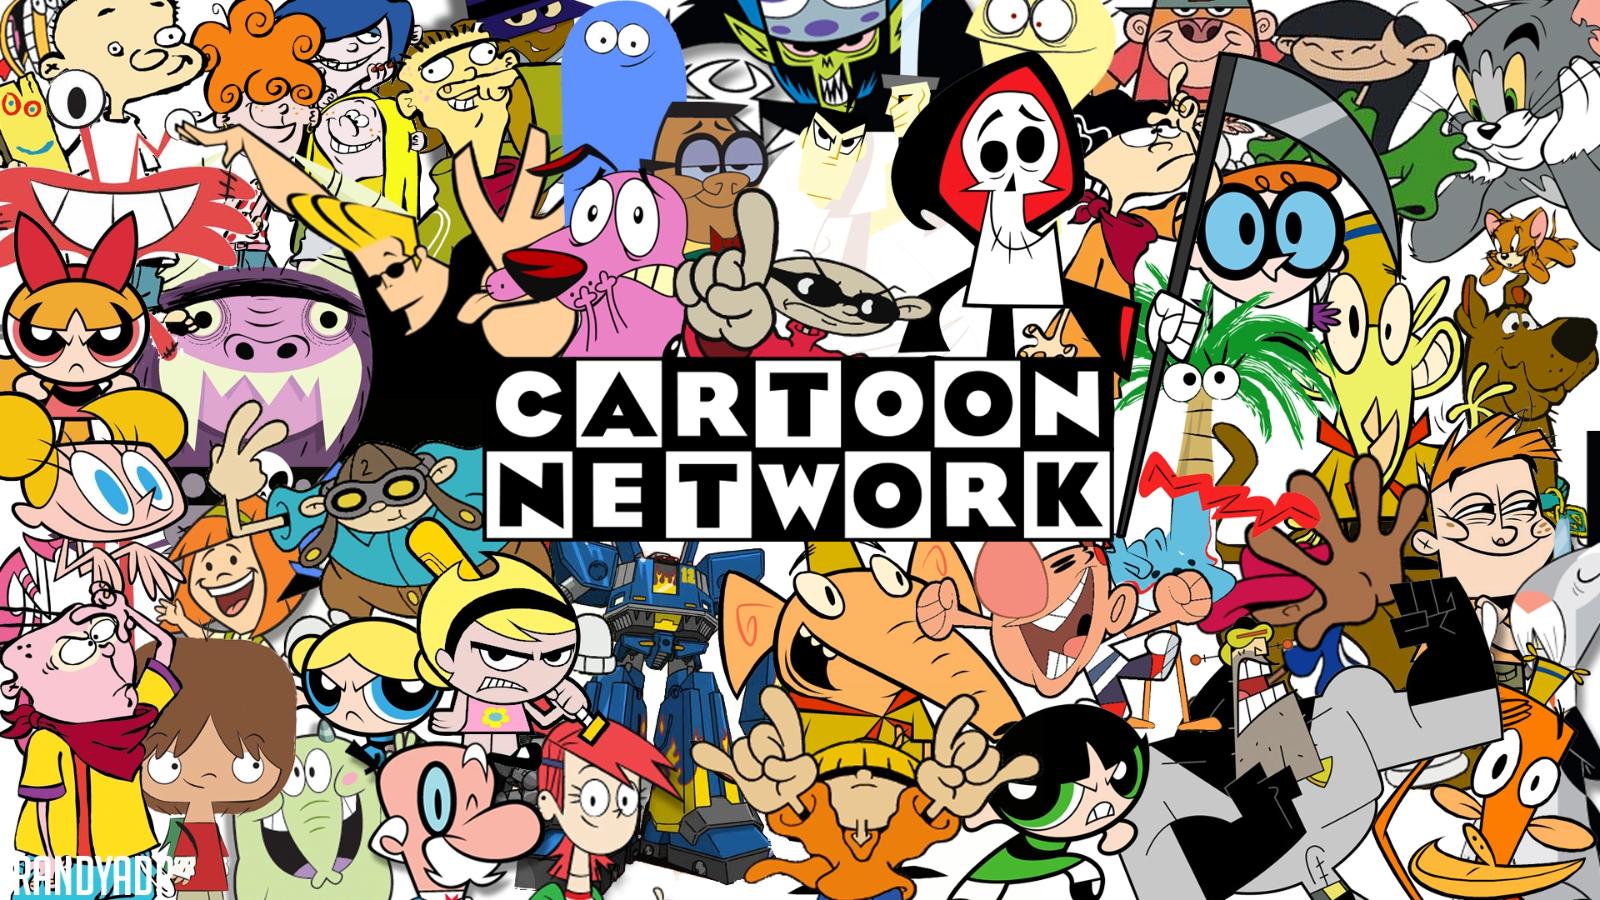 The Cartoon Network logo